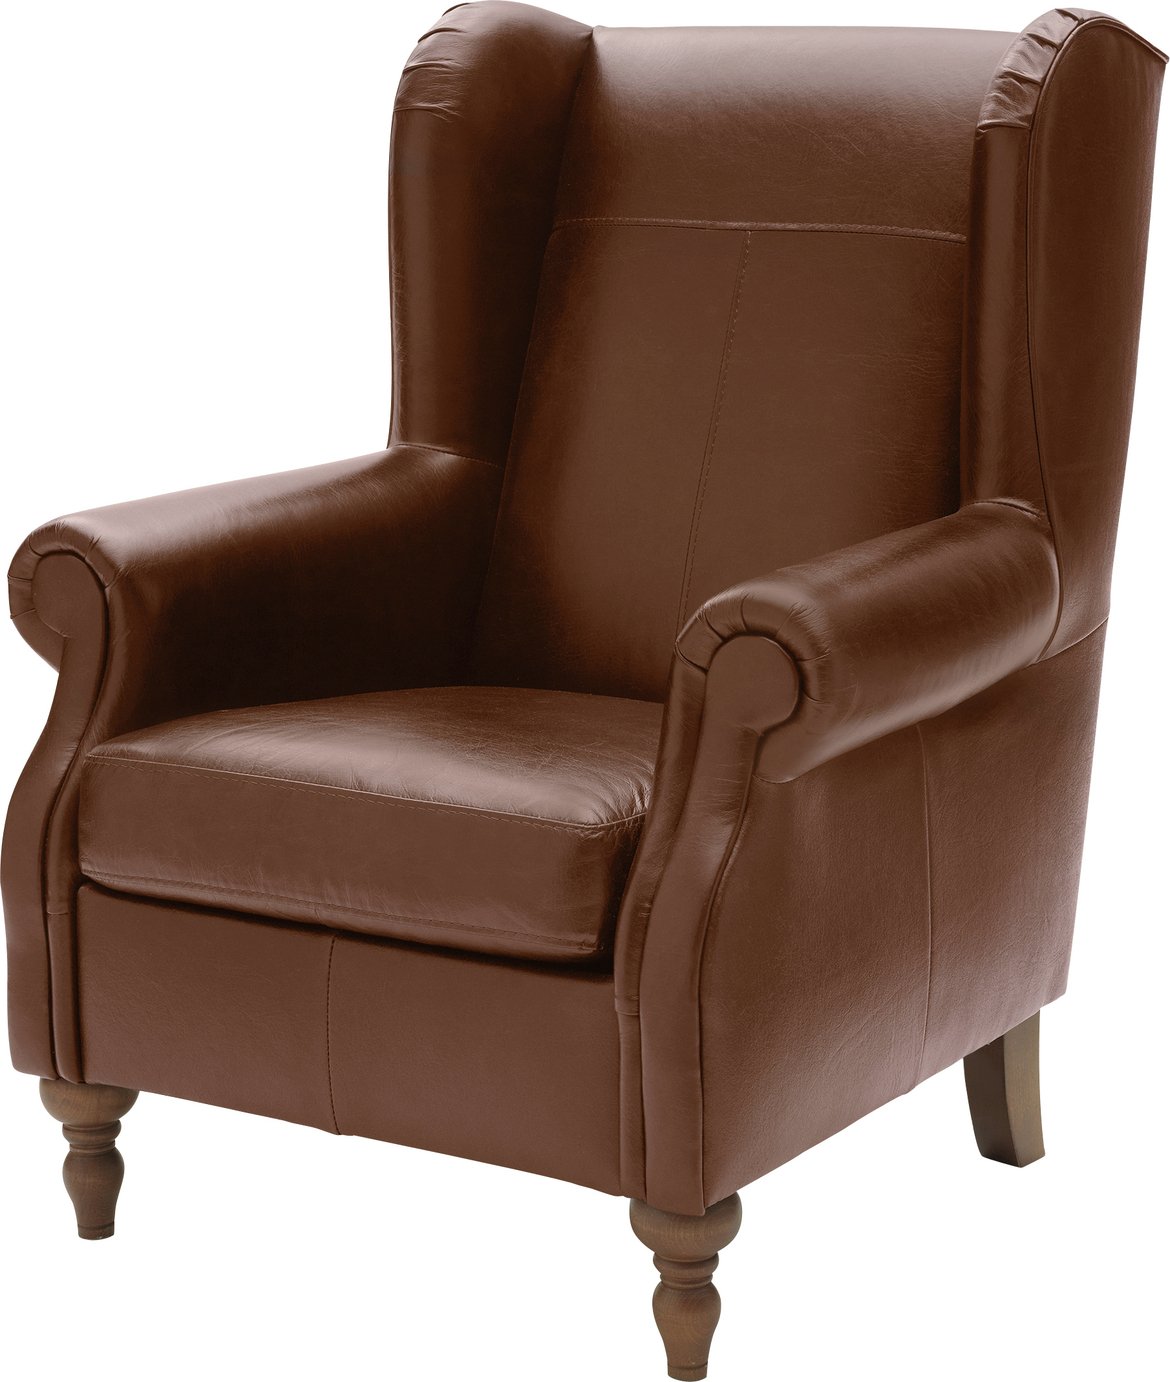 Argos Home Argyll Leather High Back Chair - Tan